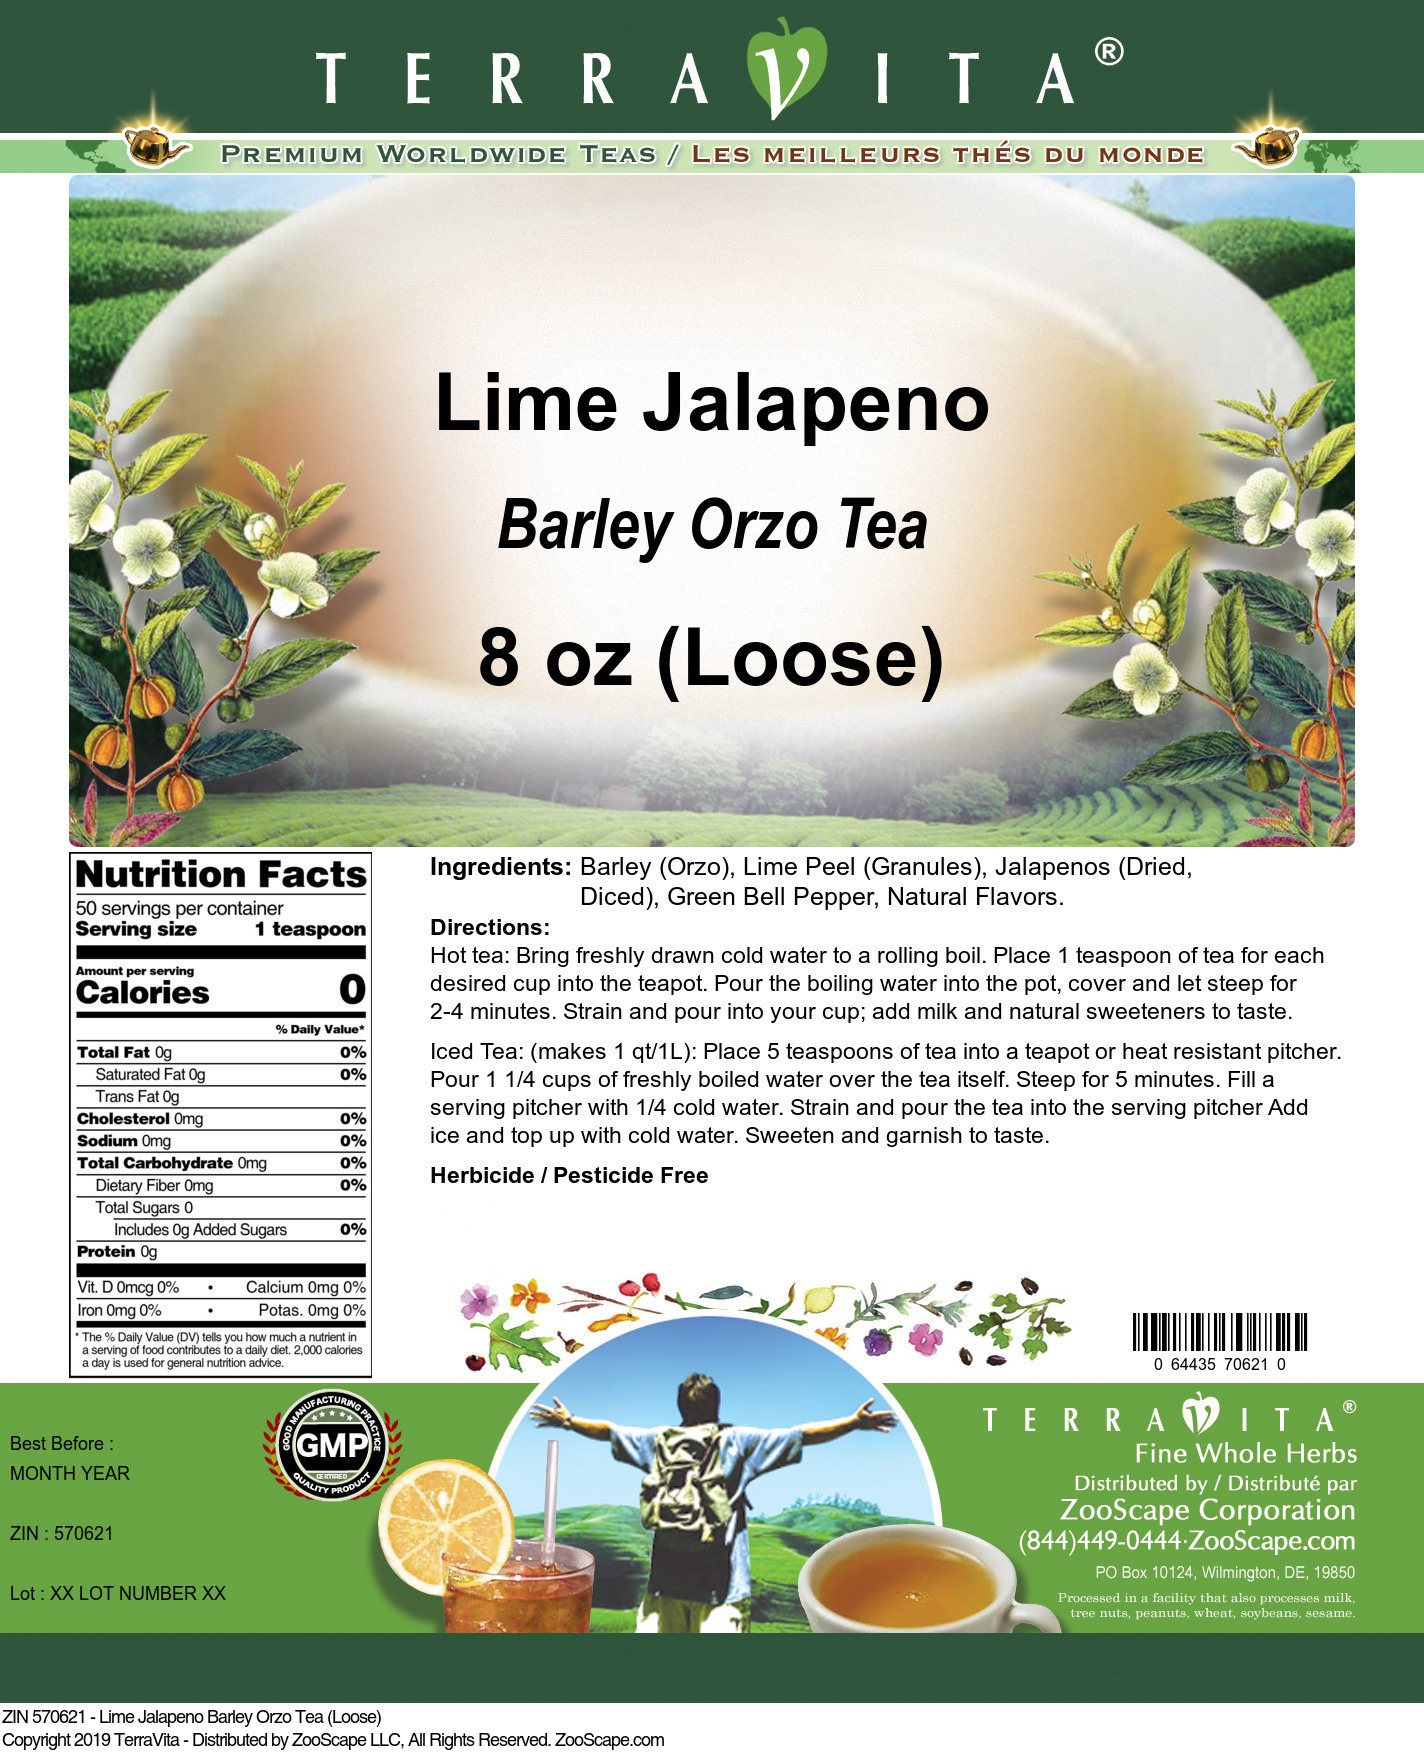 Lime Jalapeno Barley Orzo Tea (Loose) - Label